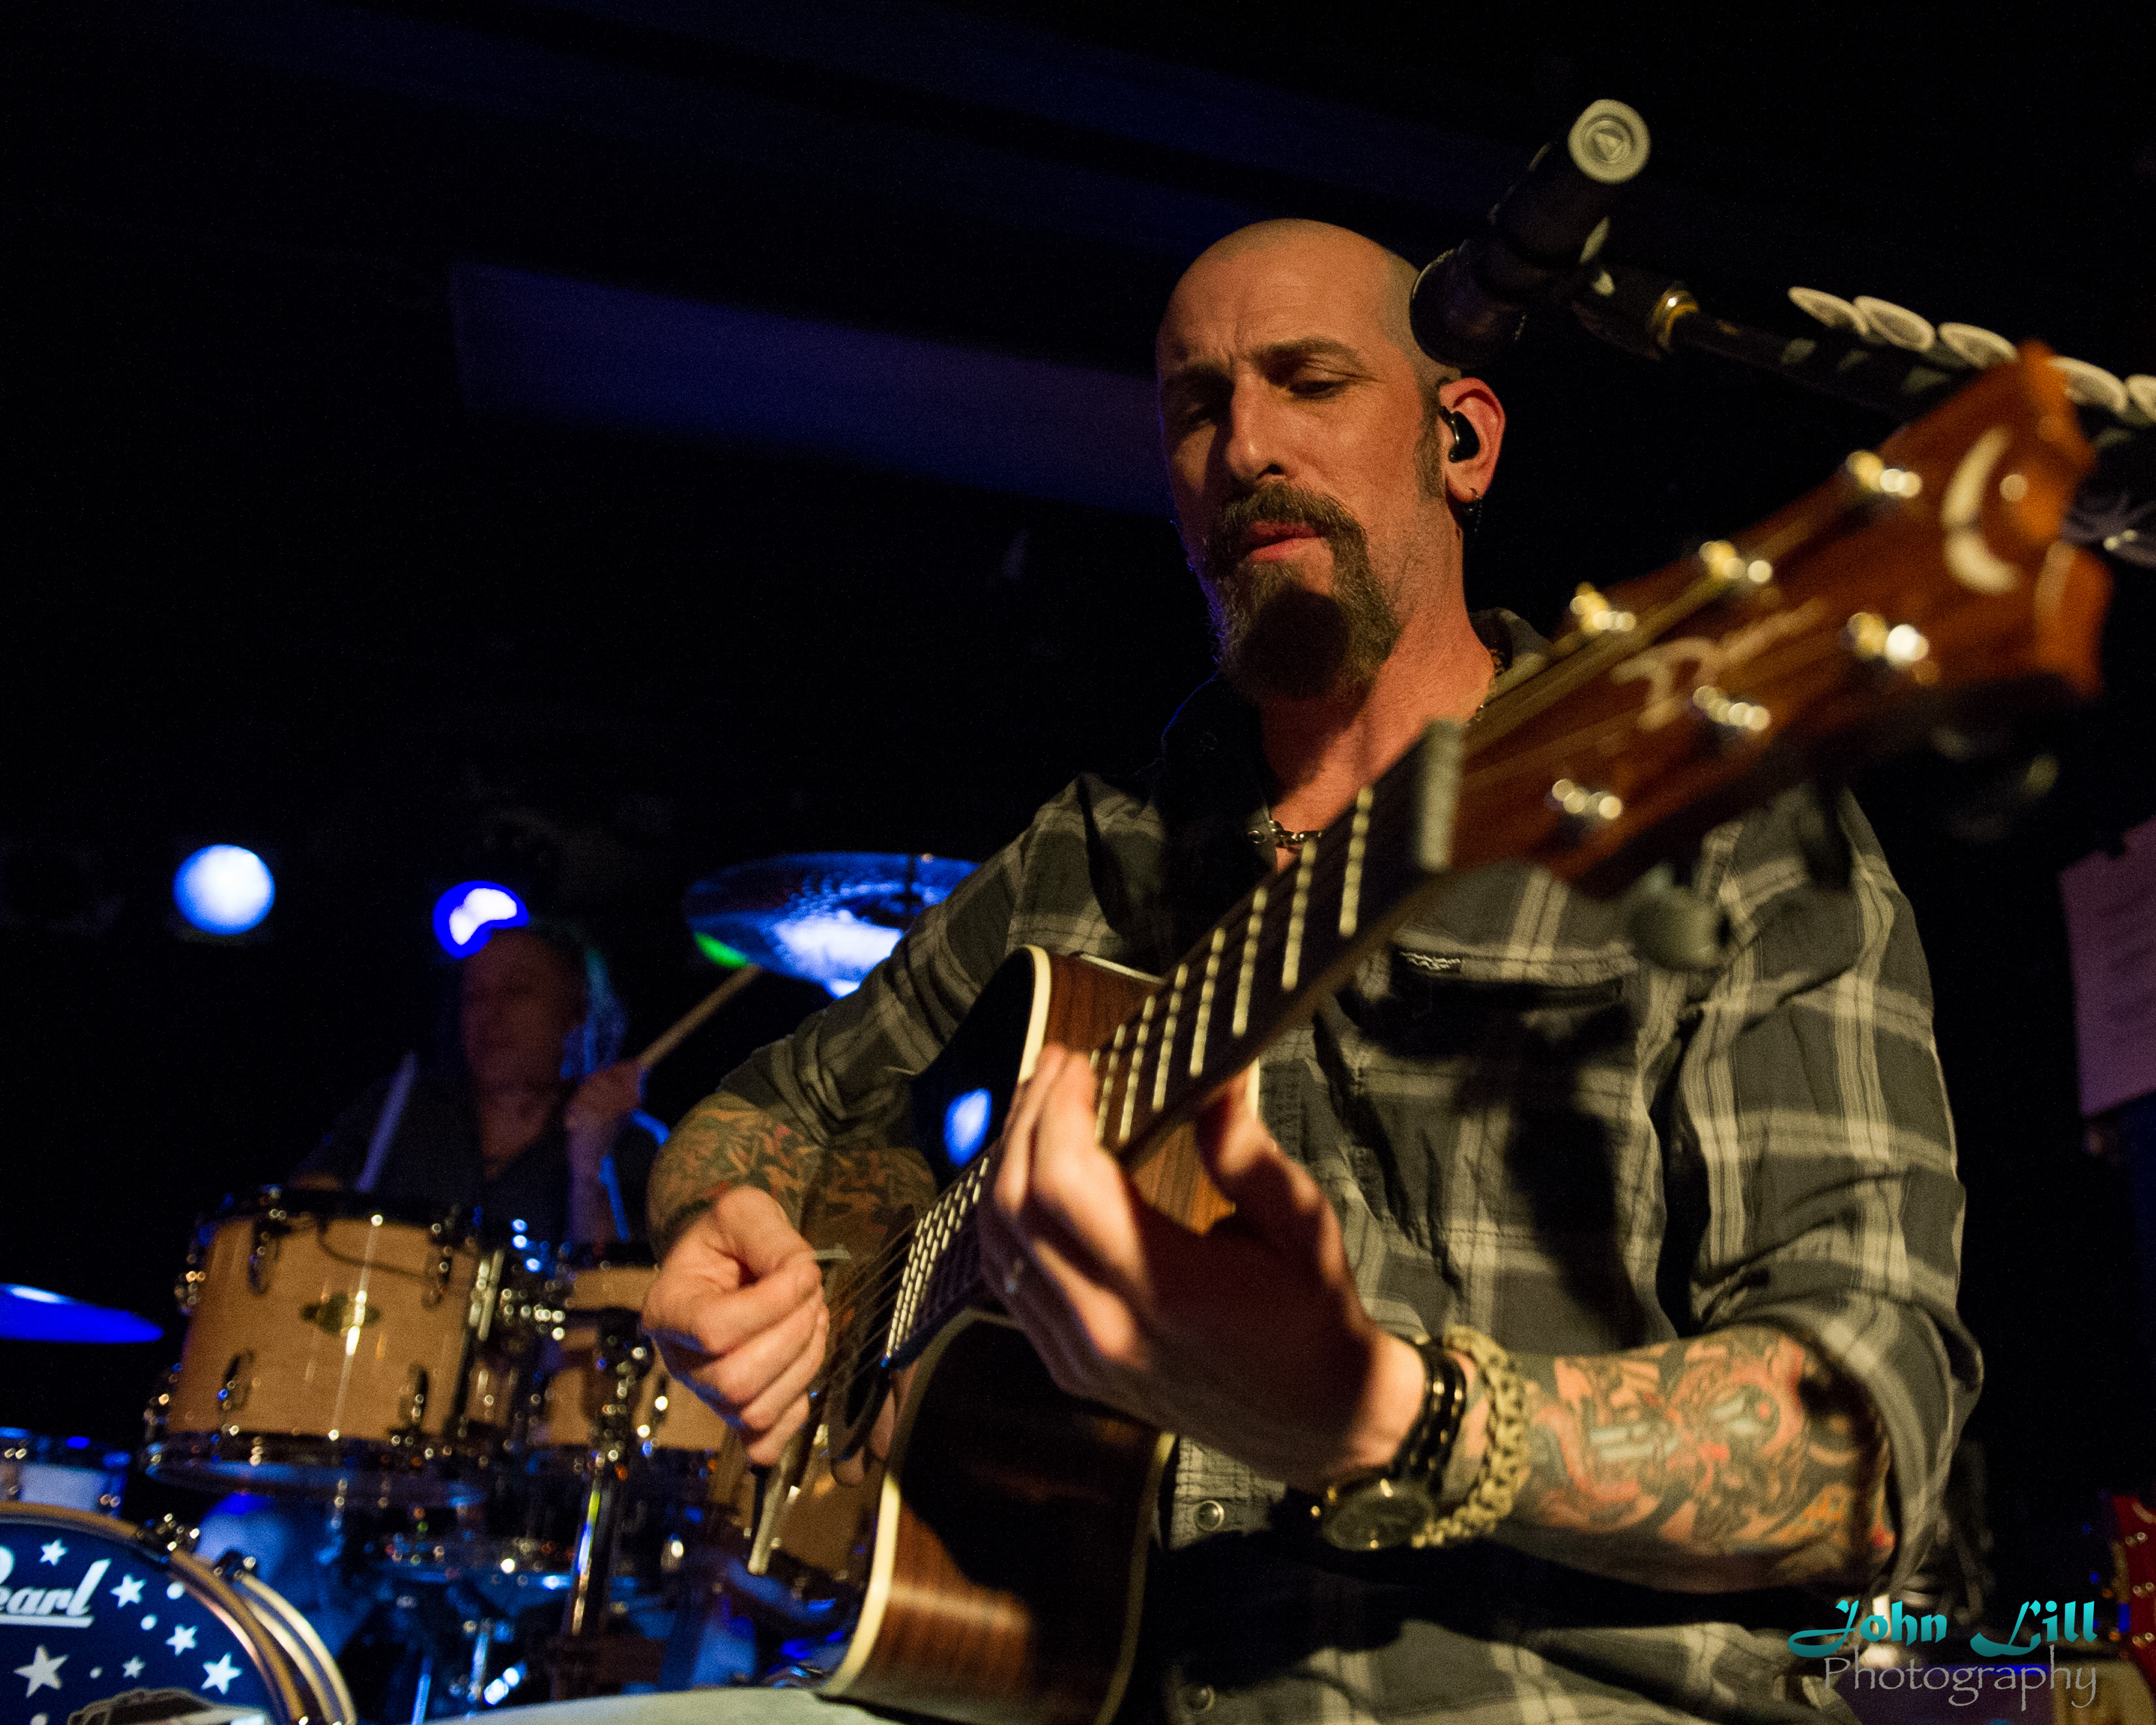 Sevendust Live at El Corazon (Photo by John Lill)